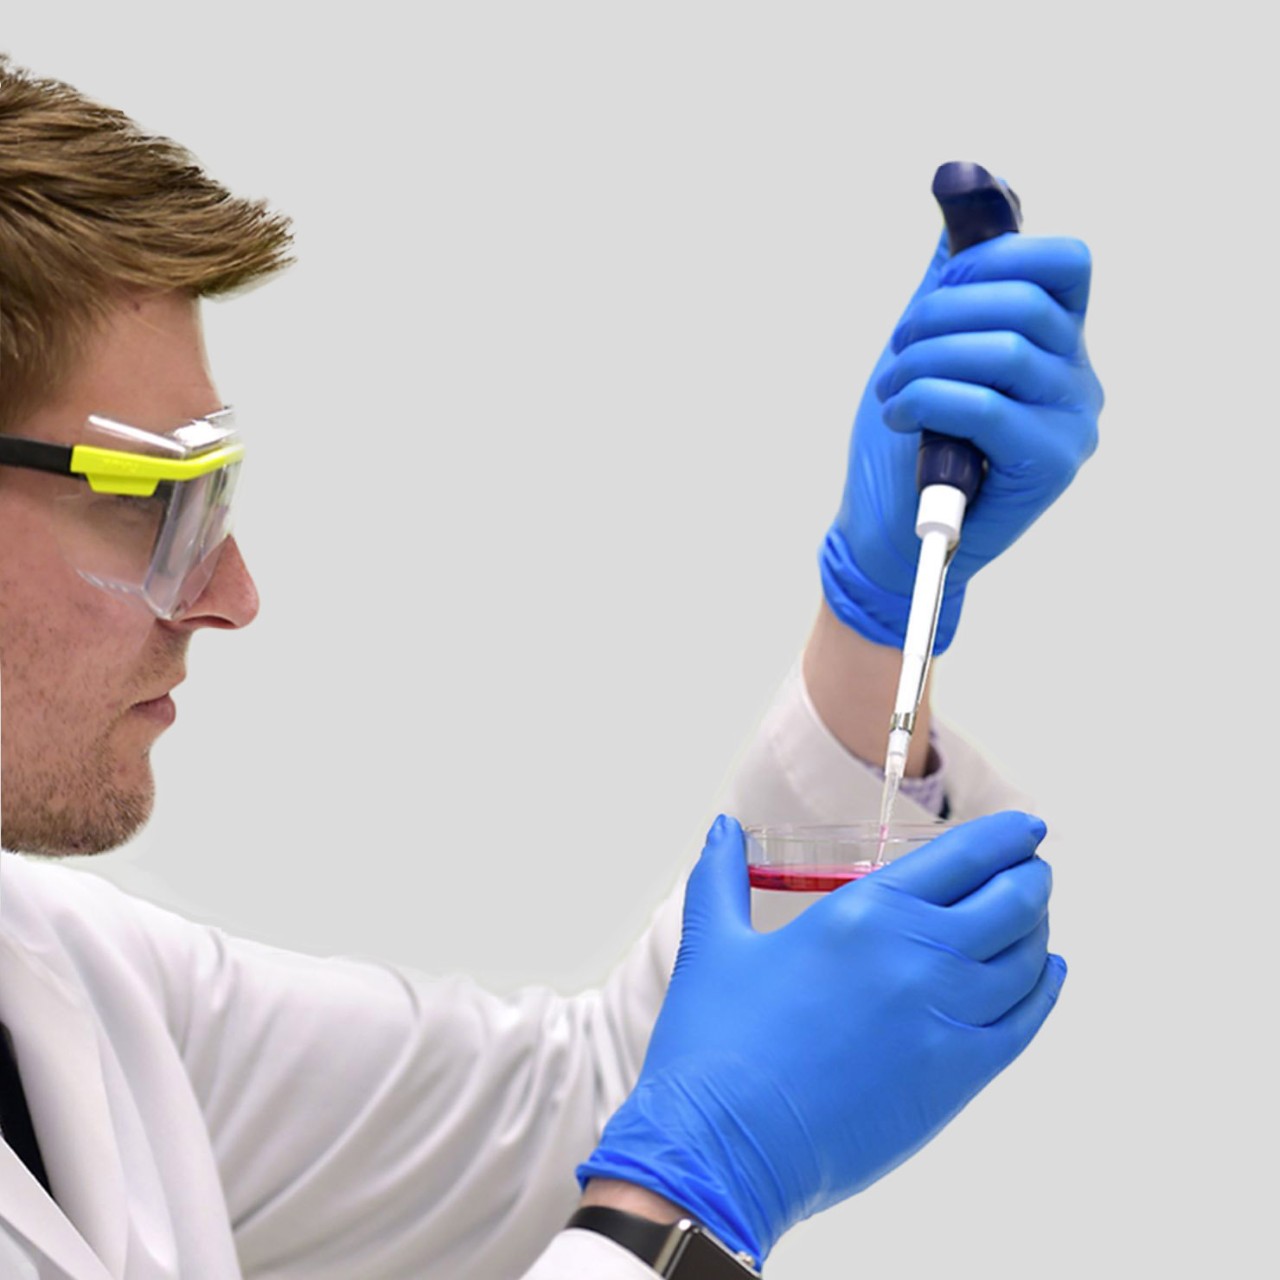 AbbVie scientist holding a petri dish